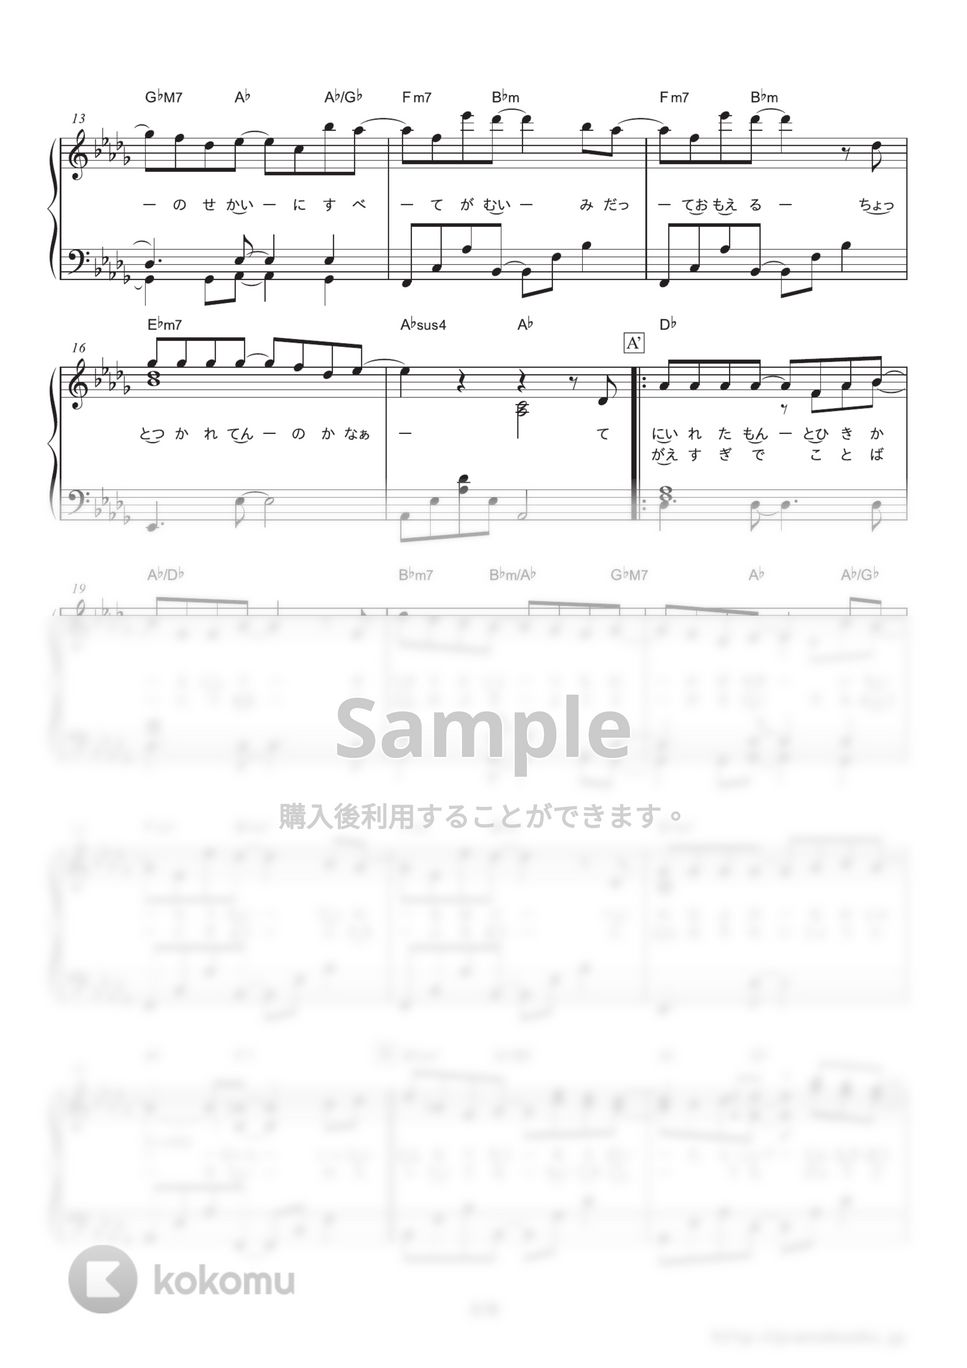 Mr.Children - HANABI (ドラマ『コード・ブルー』主題歌) by ピアノの本棚